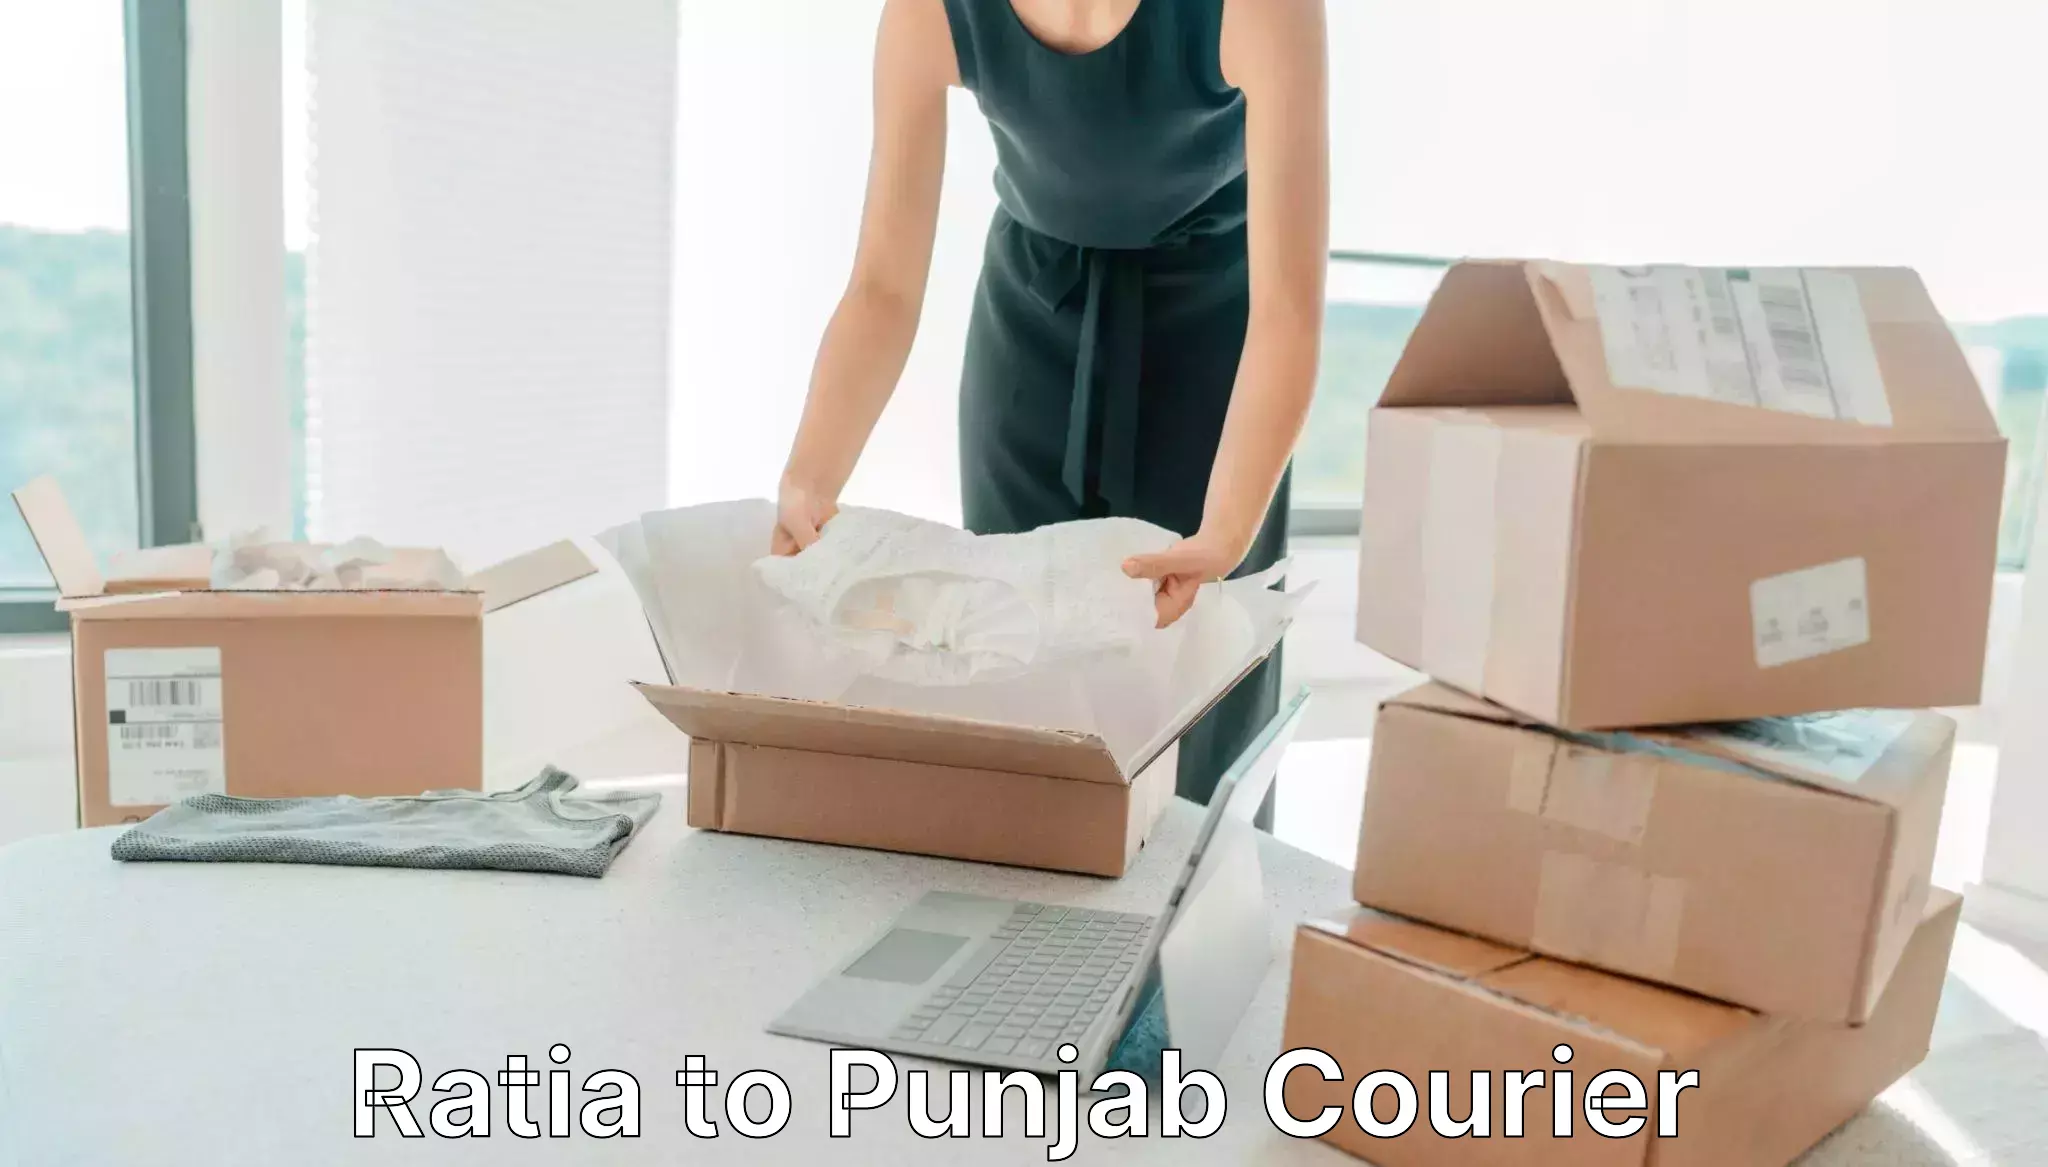 Quality courier partnerships Ratia to Punjab